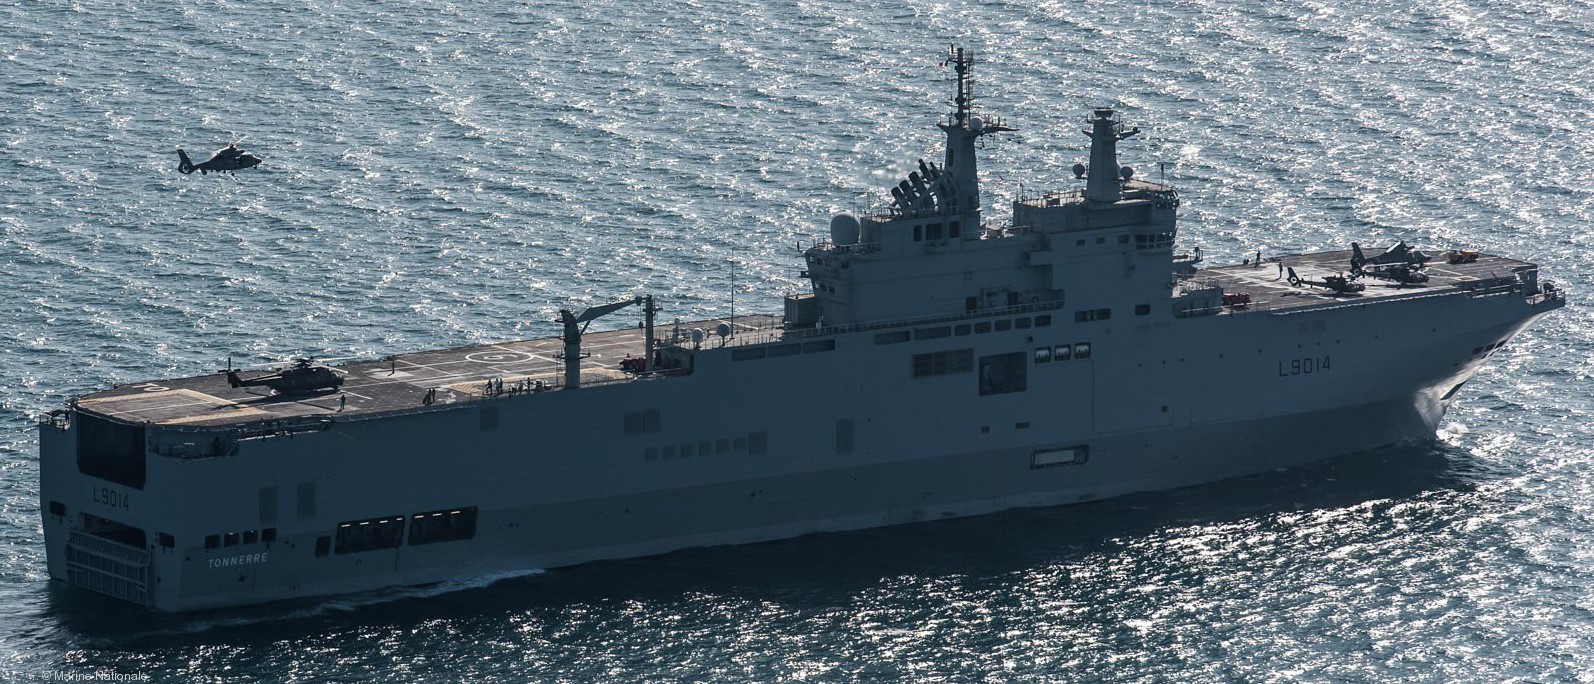 l-9014 fs tonnere mistral class amphibious assault command ship bpc french navy marine nationale 08